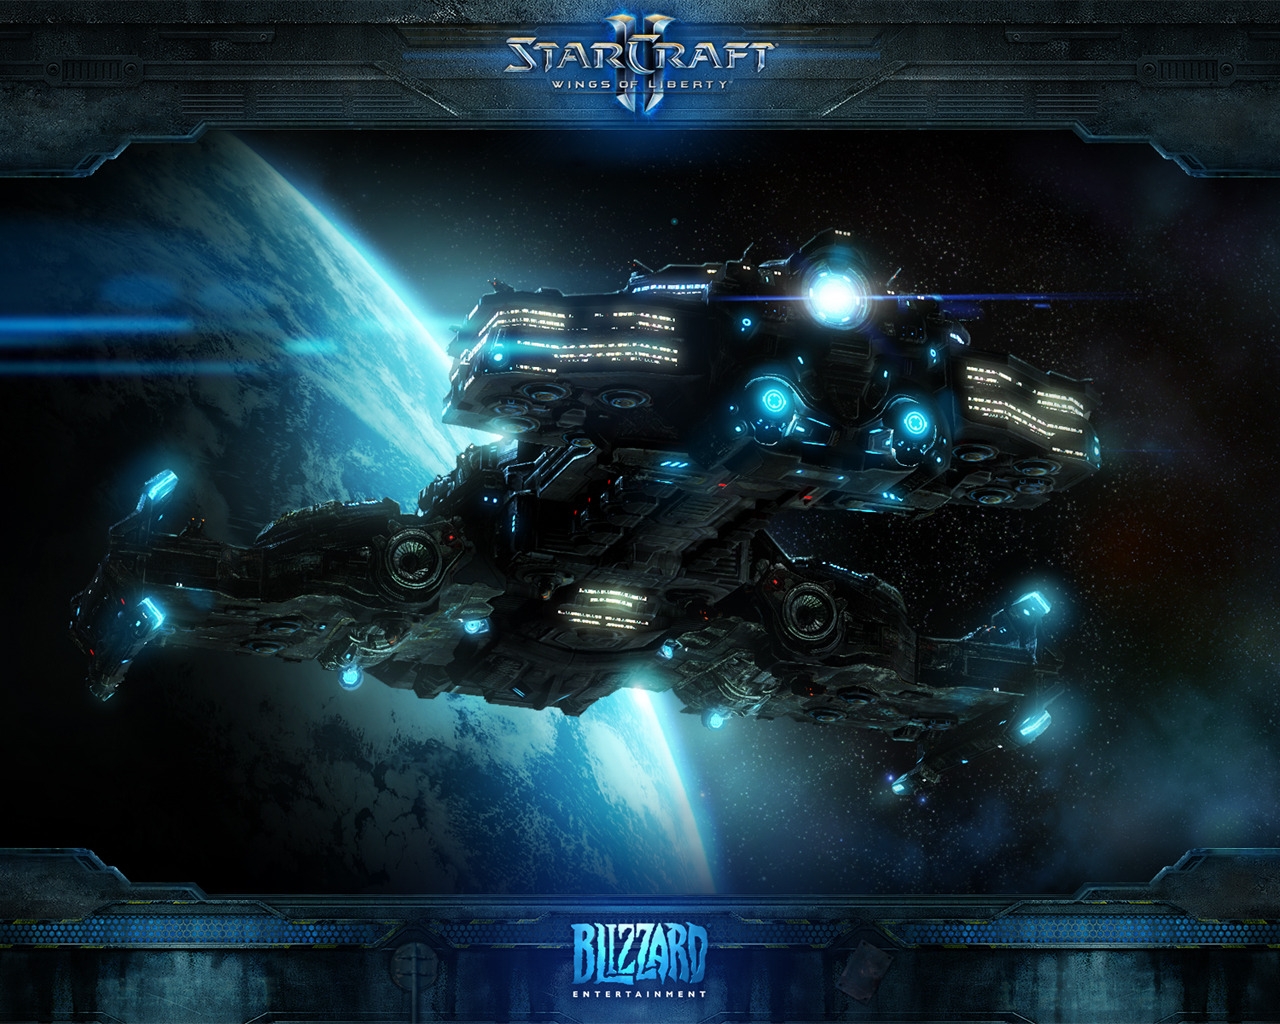 Starcraft 2 Ship for 1280 x 1024 resolution